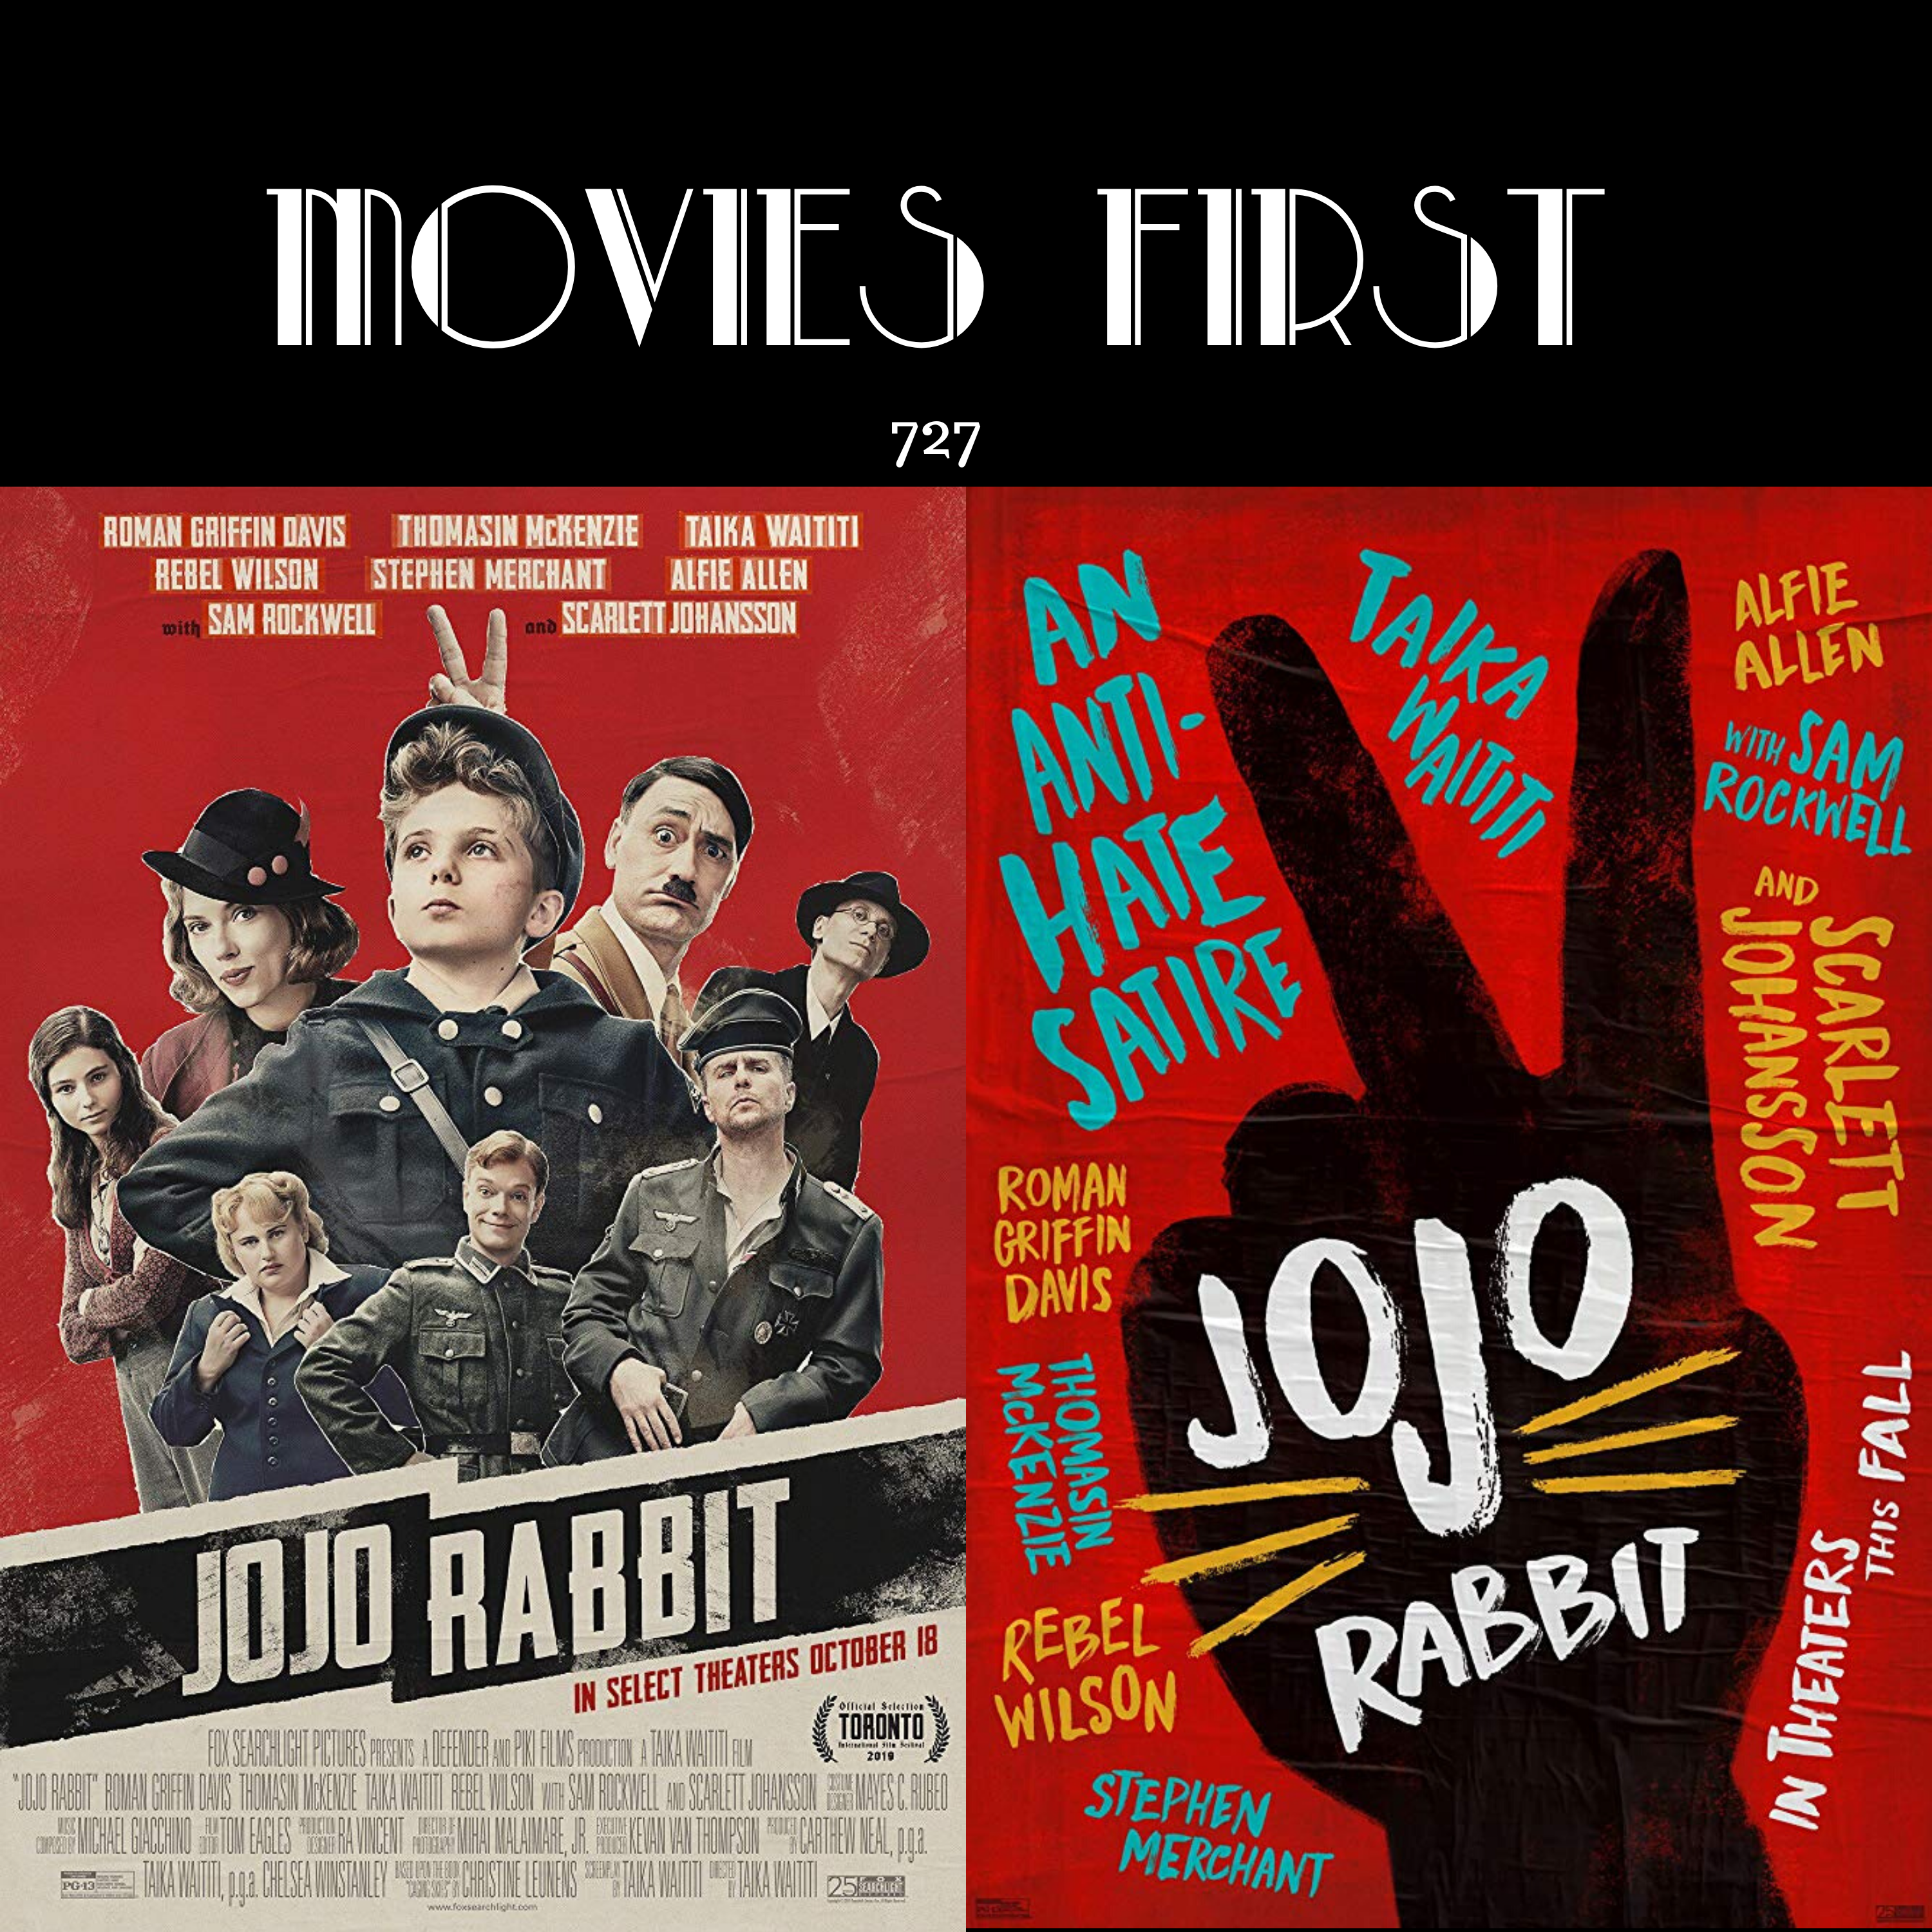 727 Jojo Rabbit (Comedy, Drama, War) (the @MoviesFirst review)